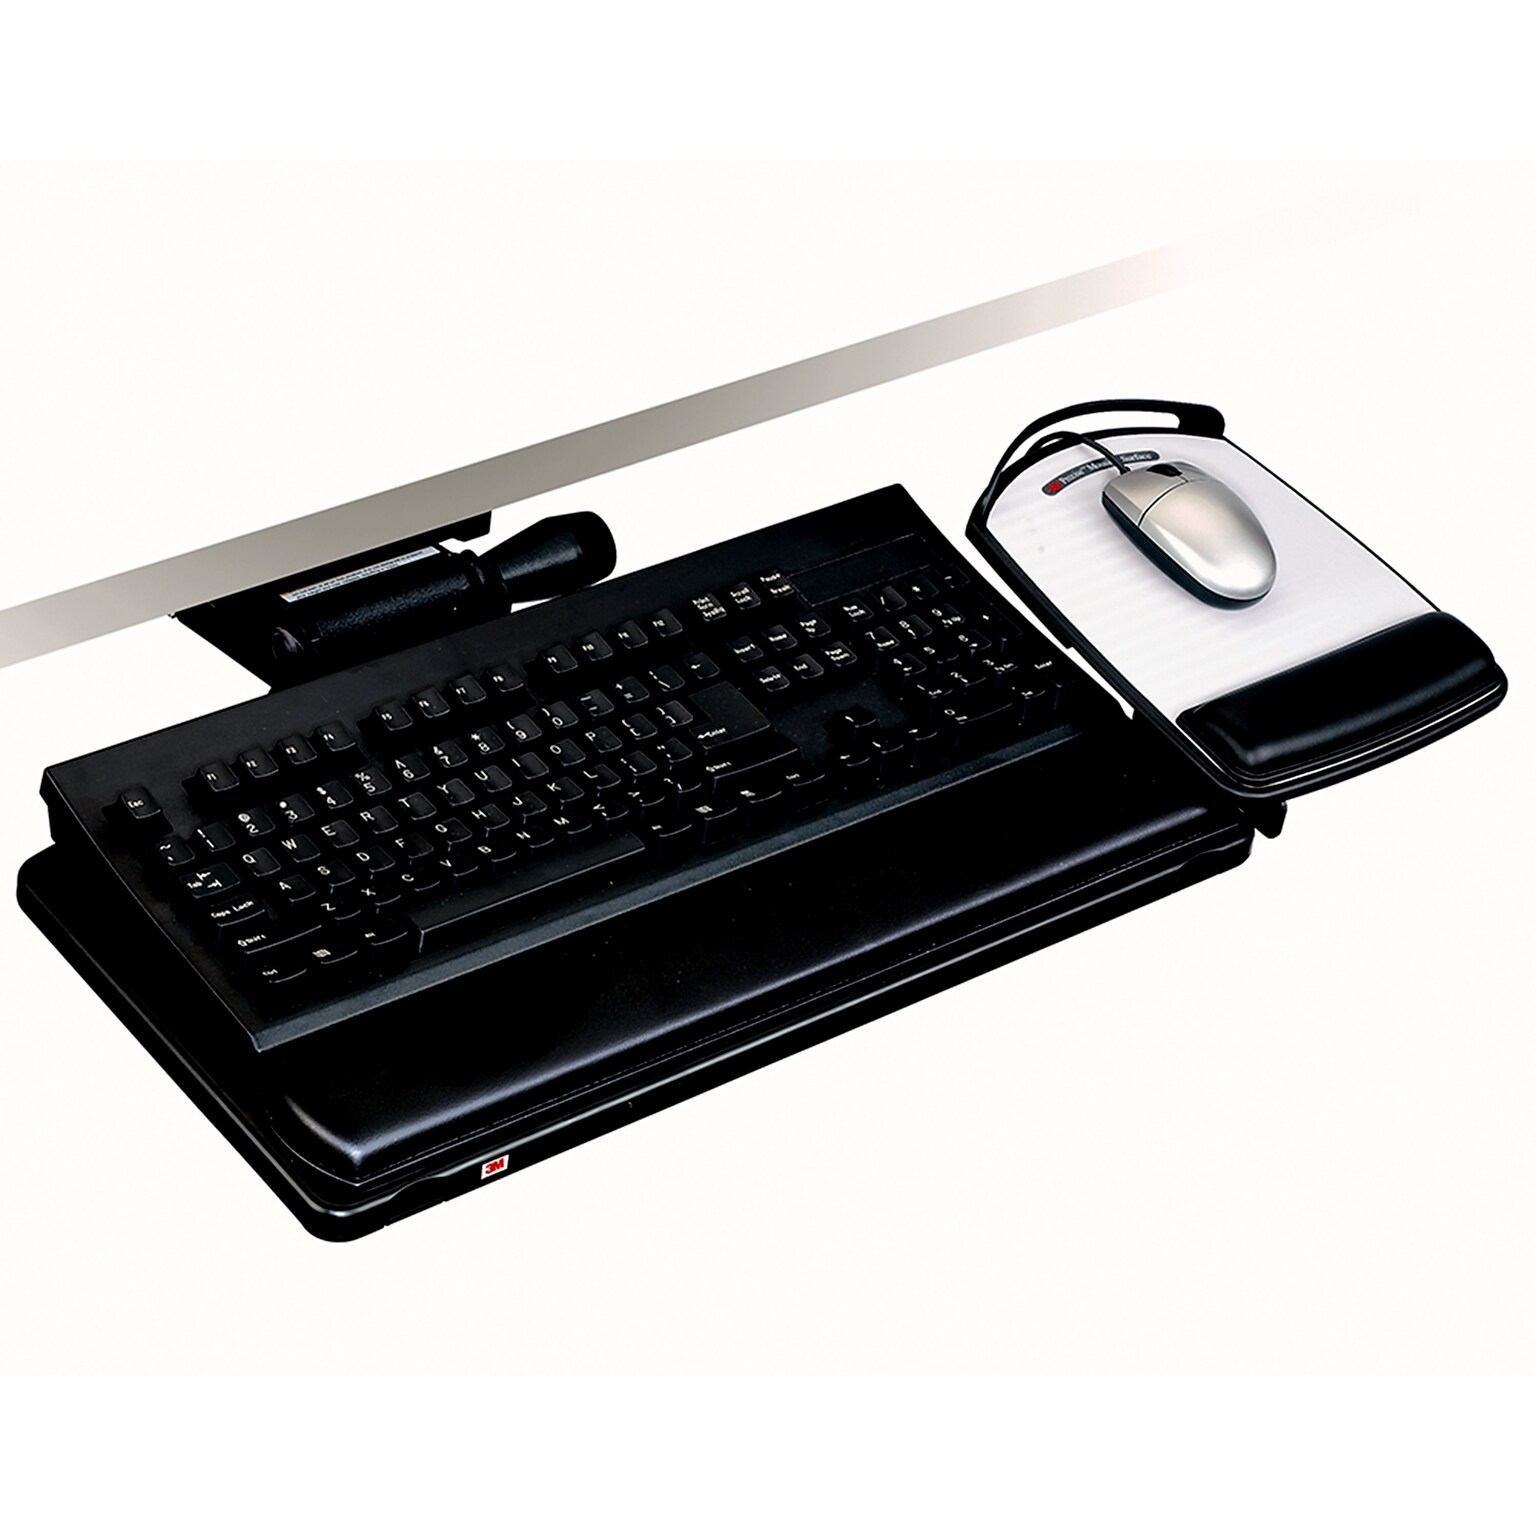 3M™ Easy Adjust Keyboard Tray, 26.75 x 10.5 Adjustable Platform, 23 Track, Black, Wrist Rest and Mouse Pad (AKT150LE)